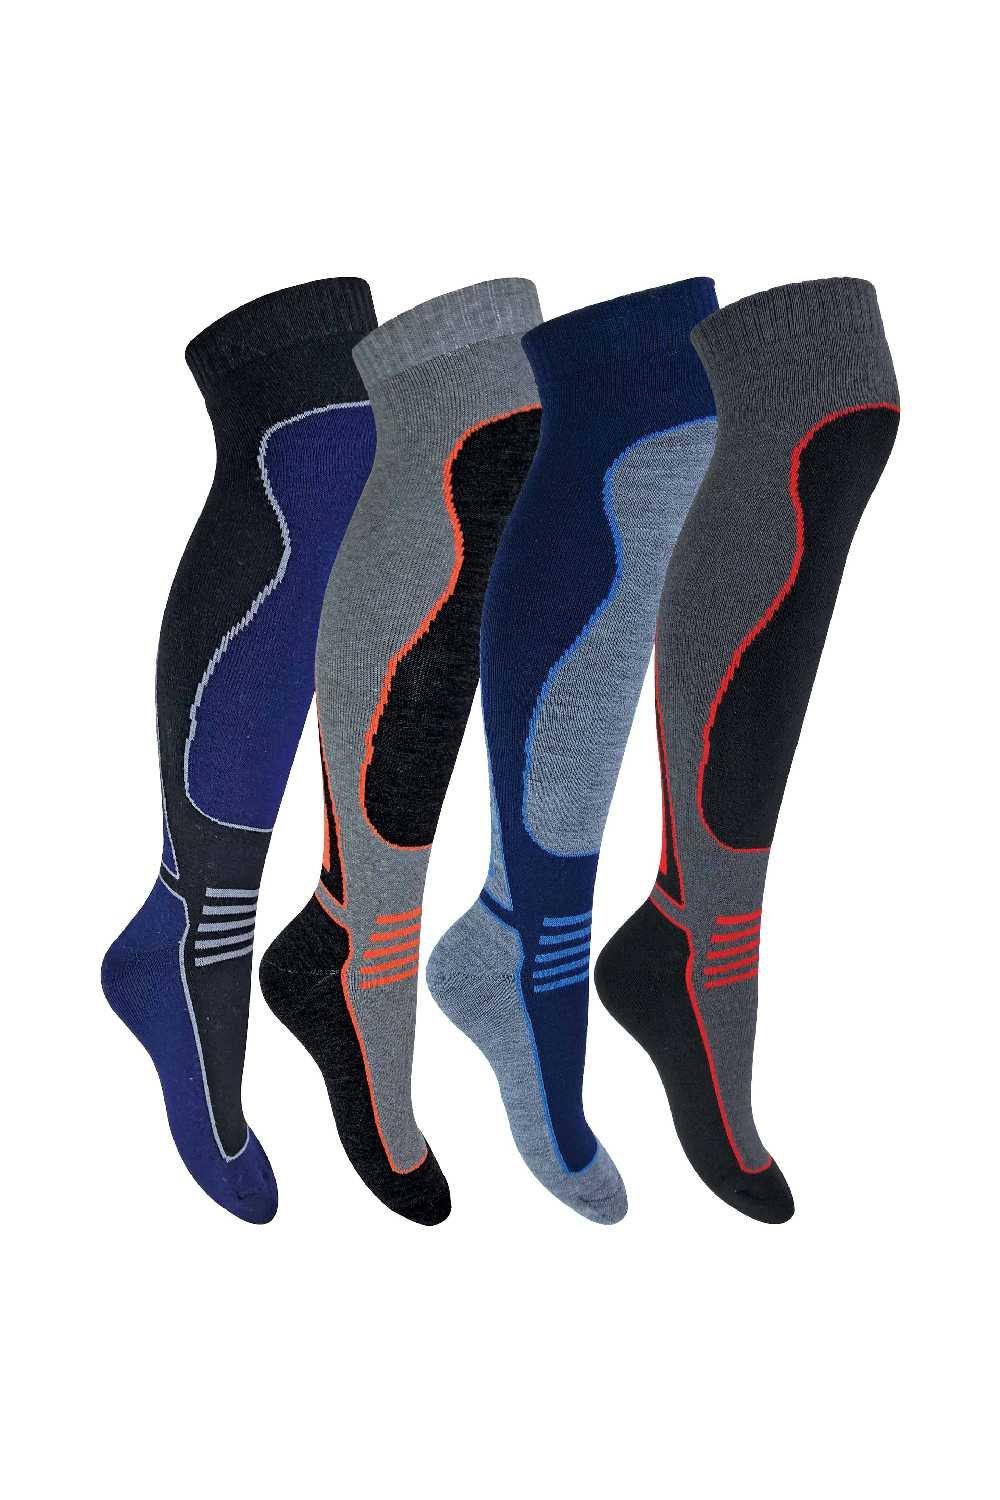 4 Pairs Extra Warm Long Knee High Colourful Wool Blend Ski Socks